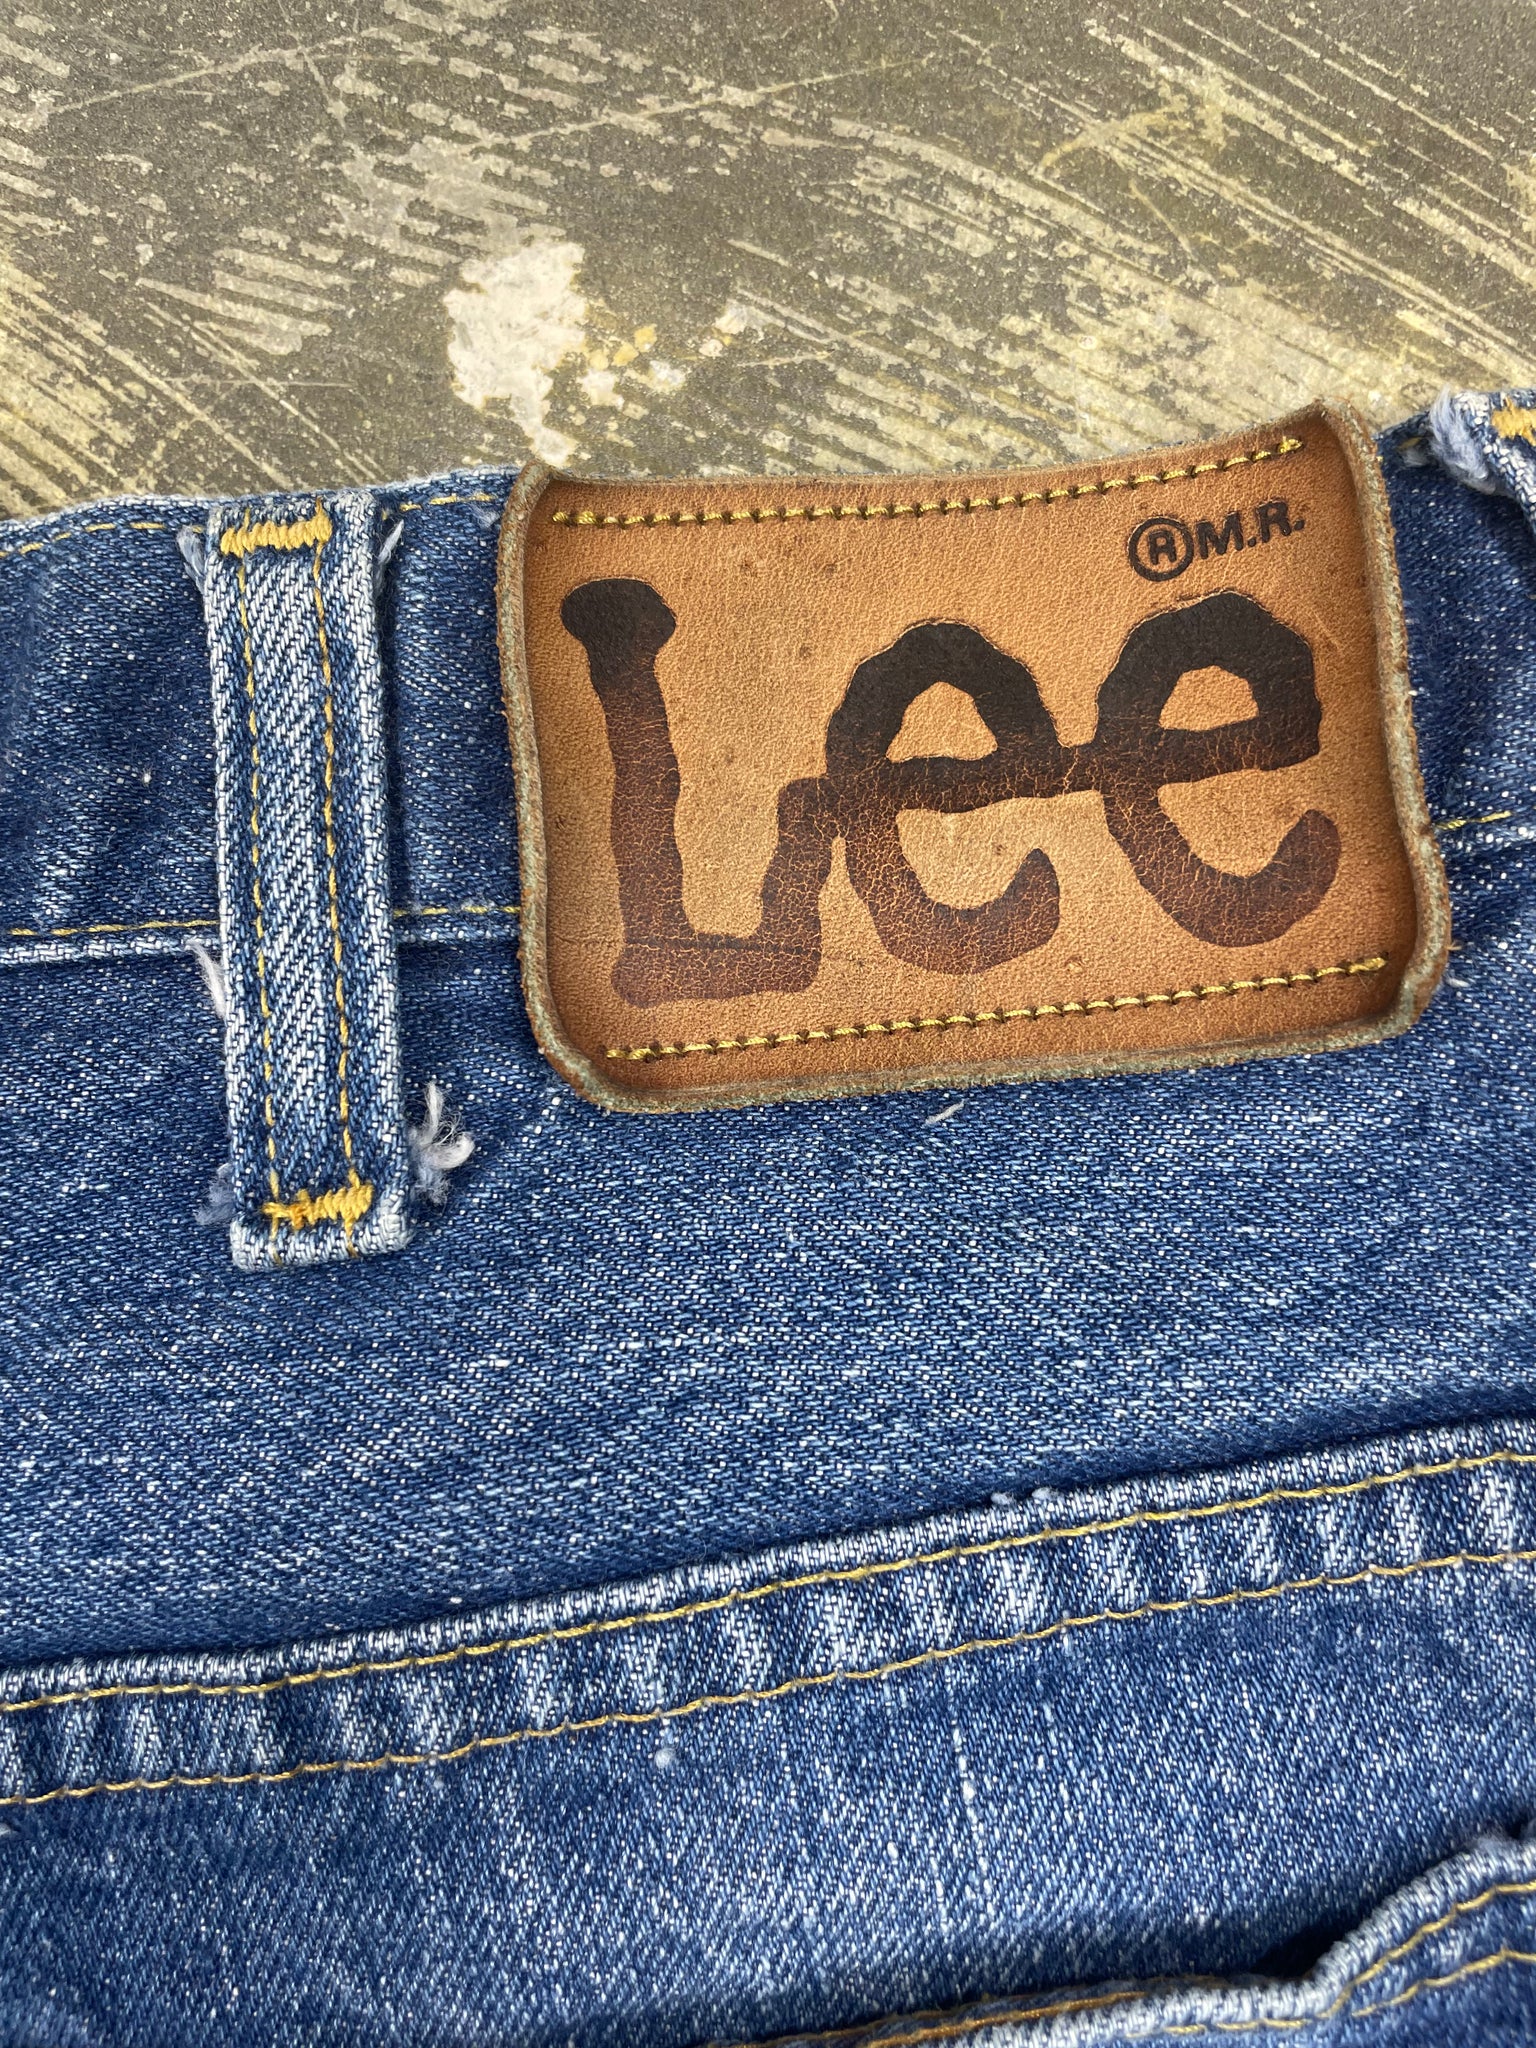 1970's Vintage Lee Riders Cutoff Denim Shorts (JYJ-127)